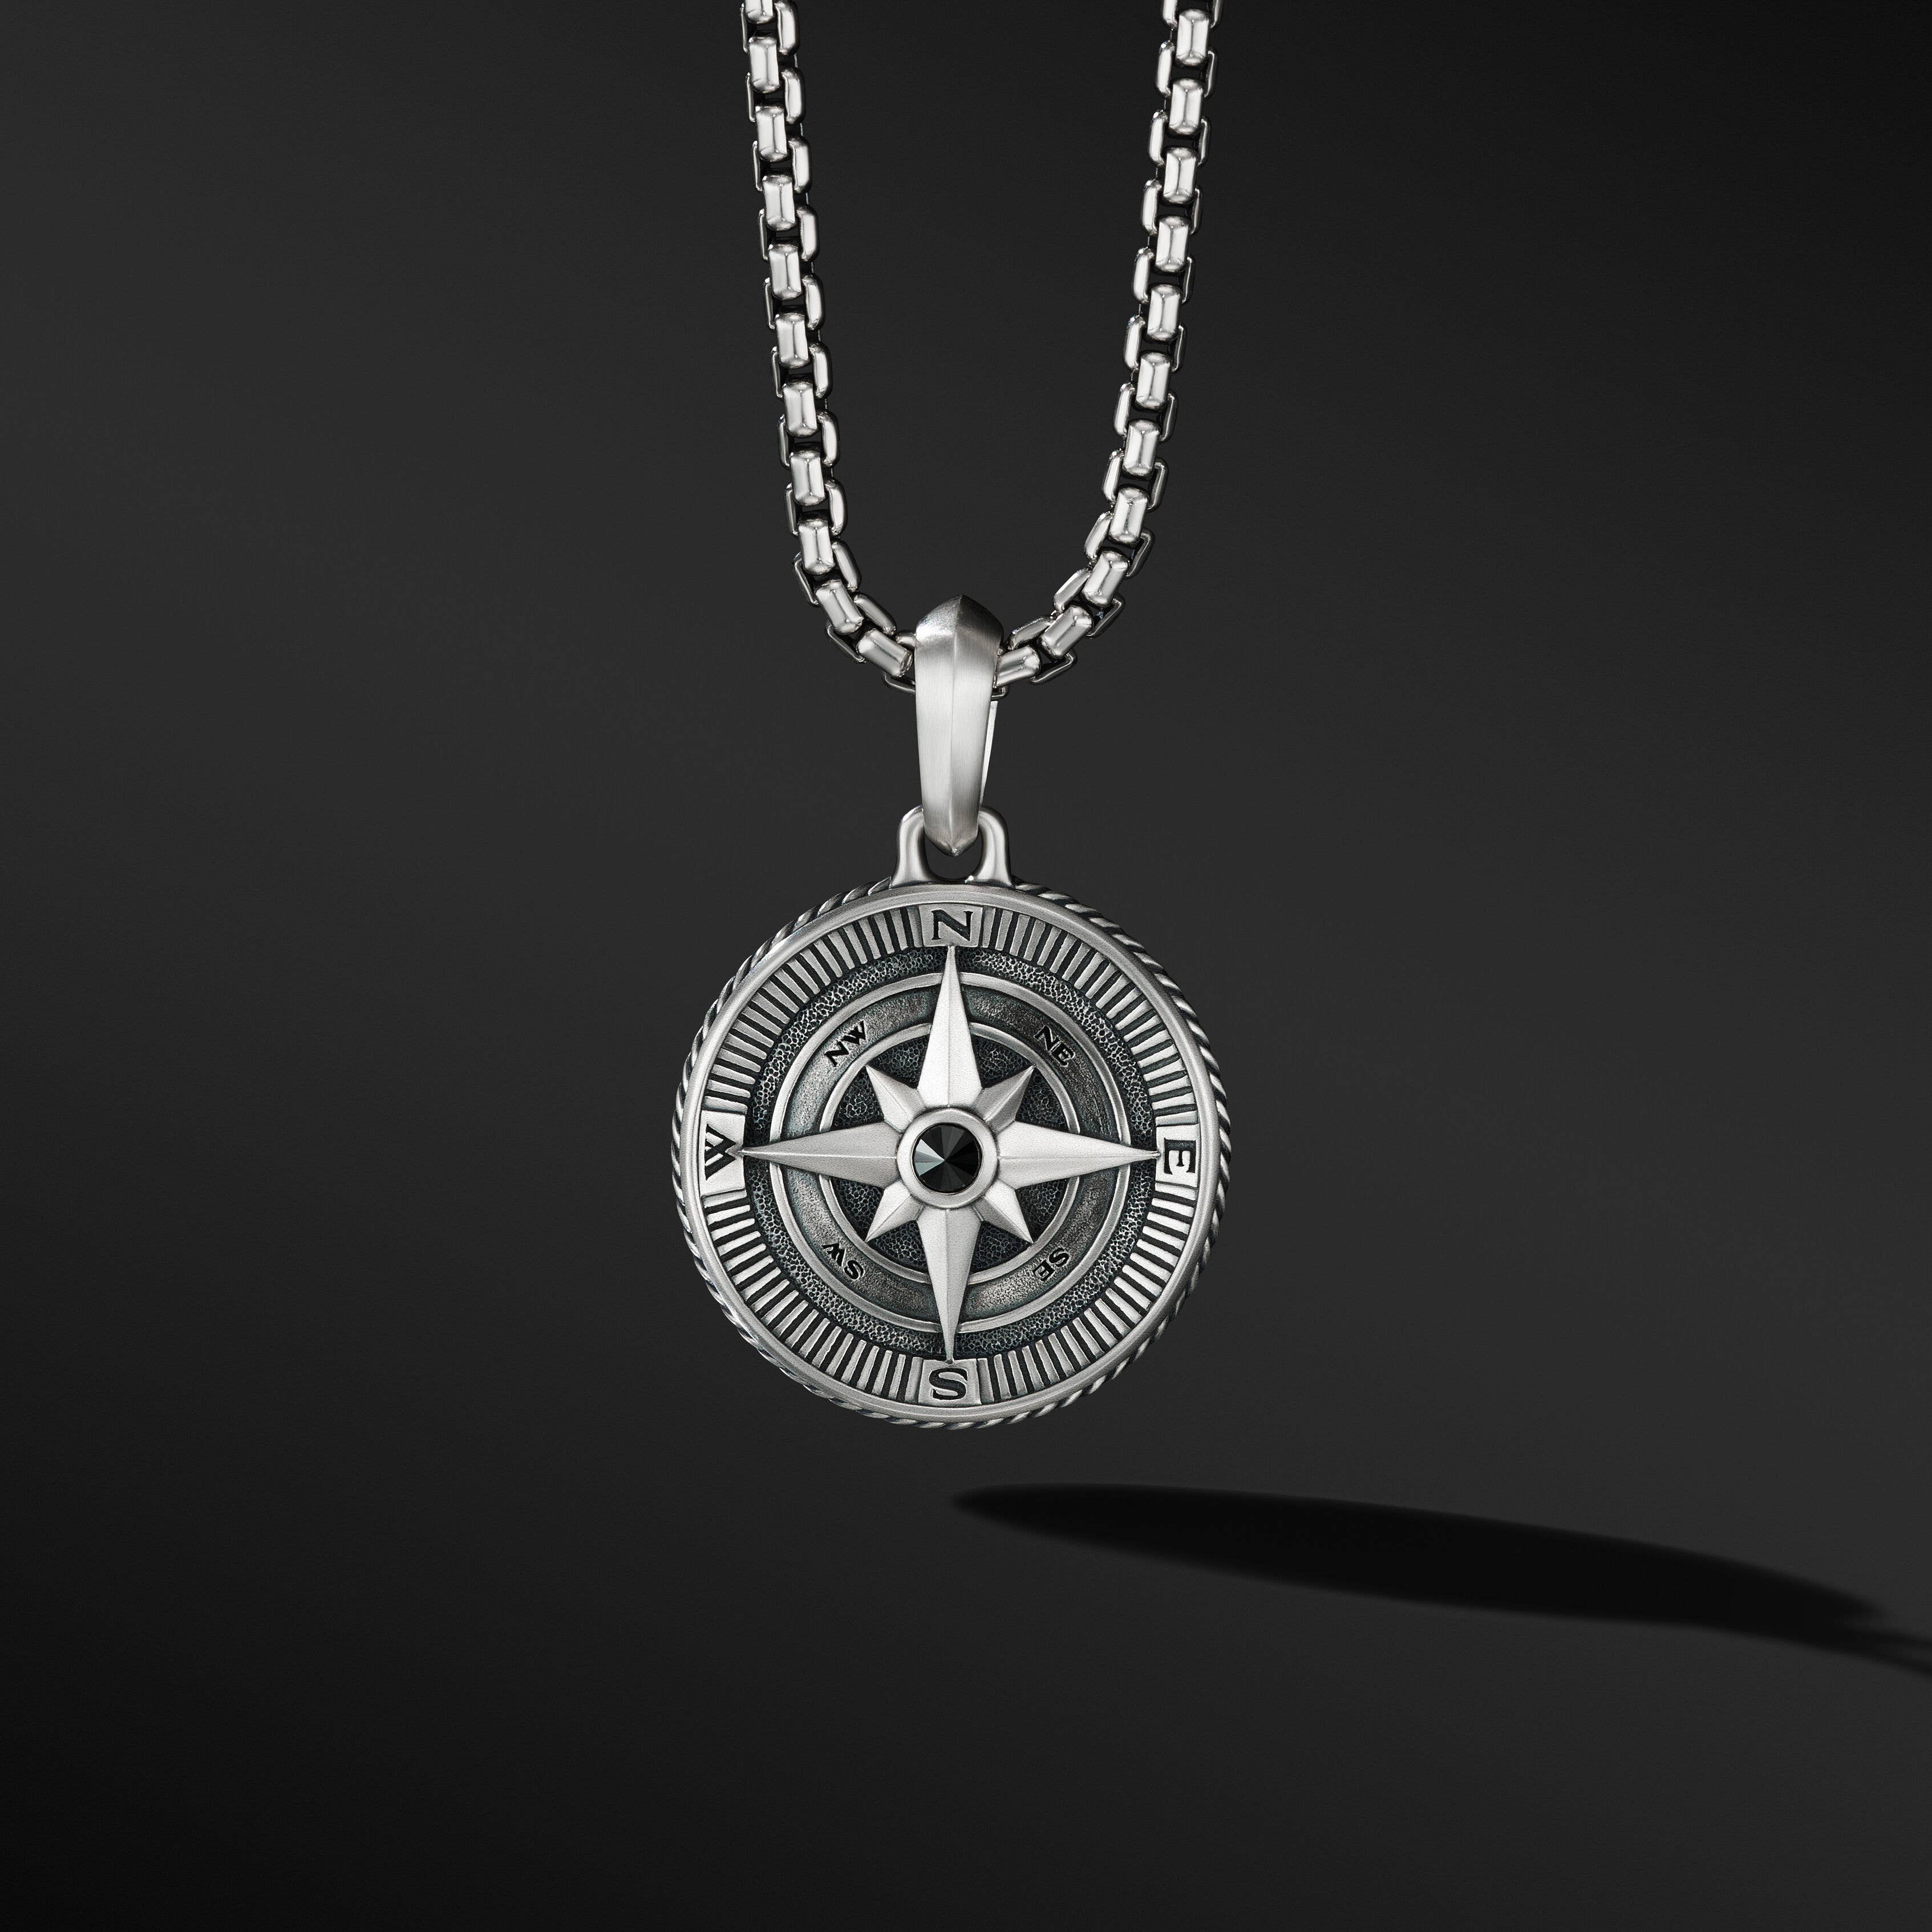 Maritime® Compass Amulet with Center Black Diamond